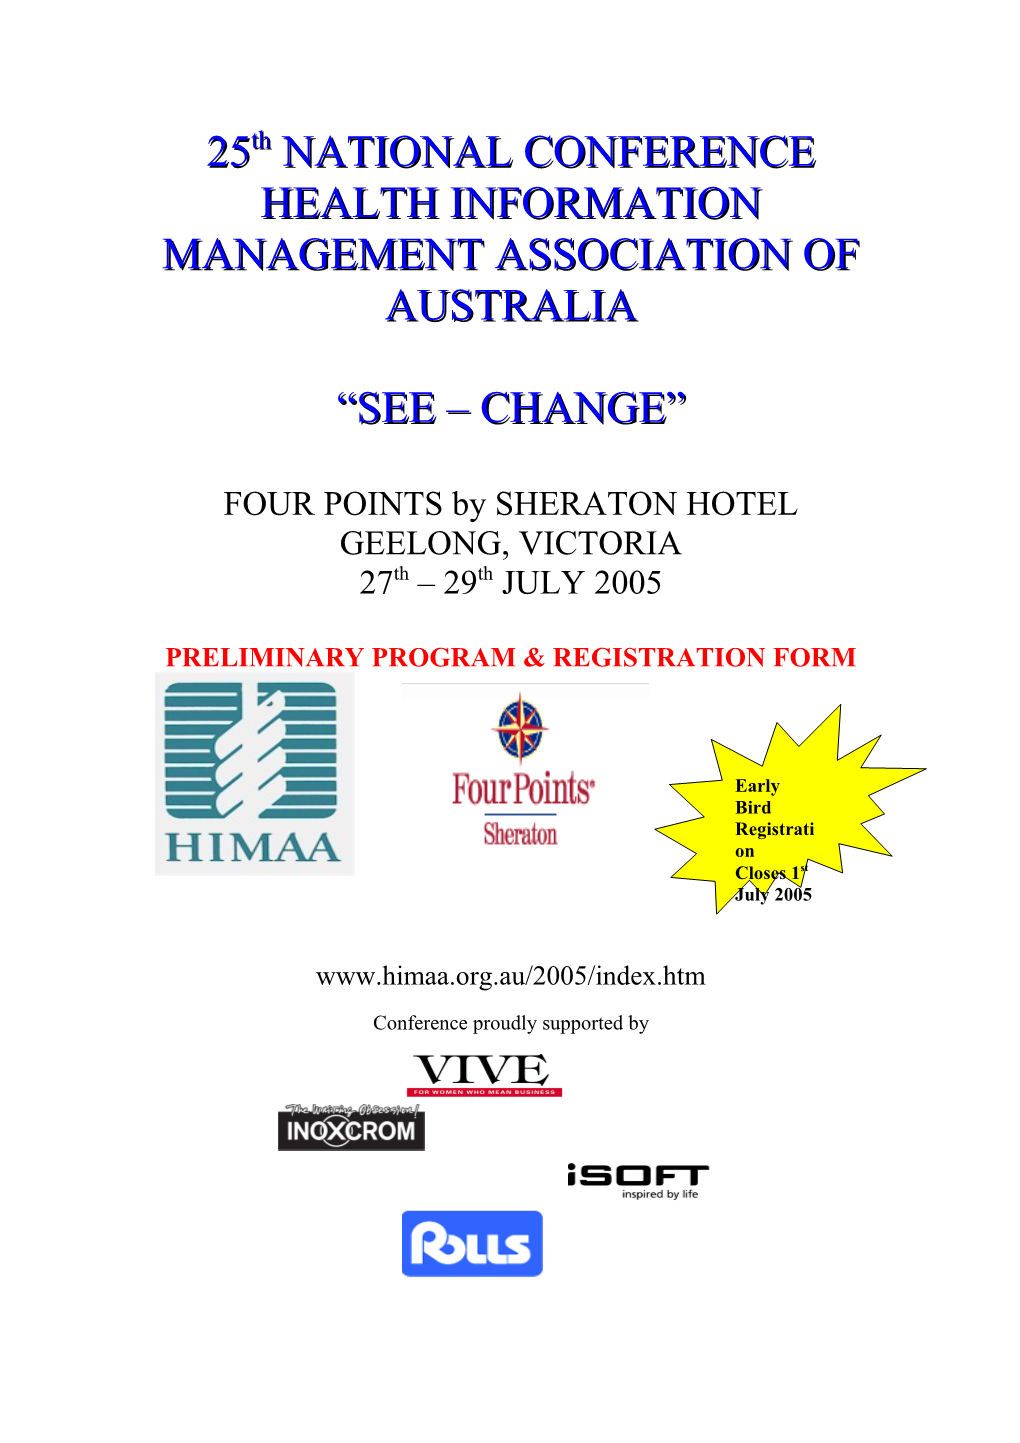 Health Information Management Association of Australia